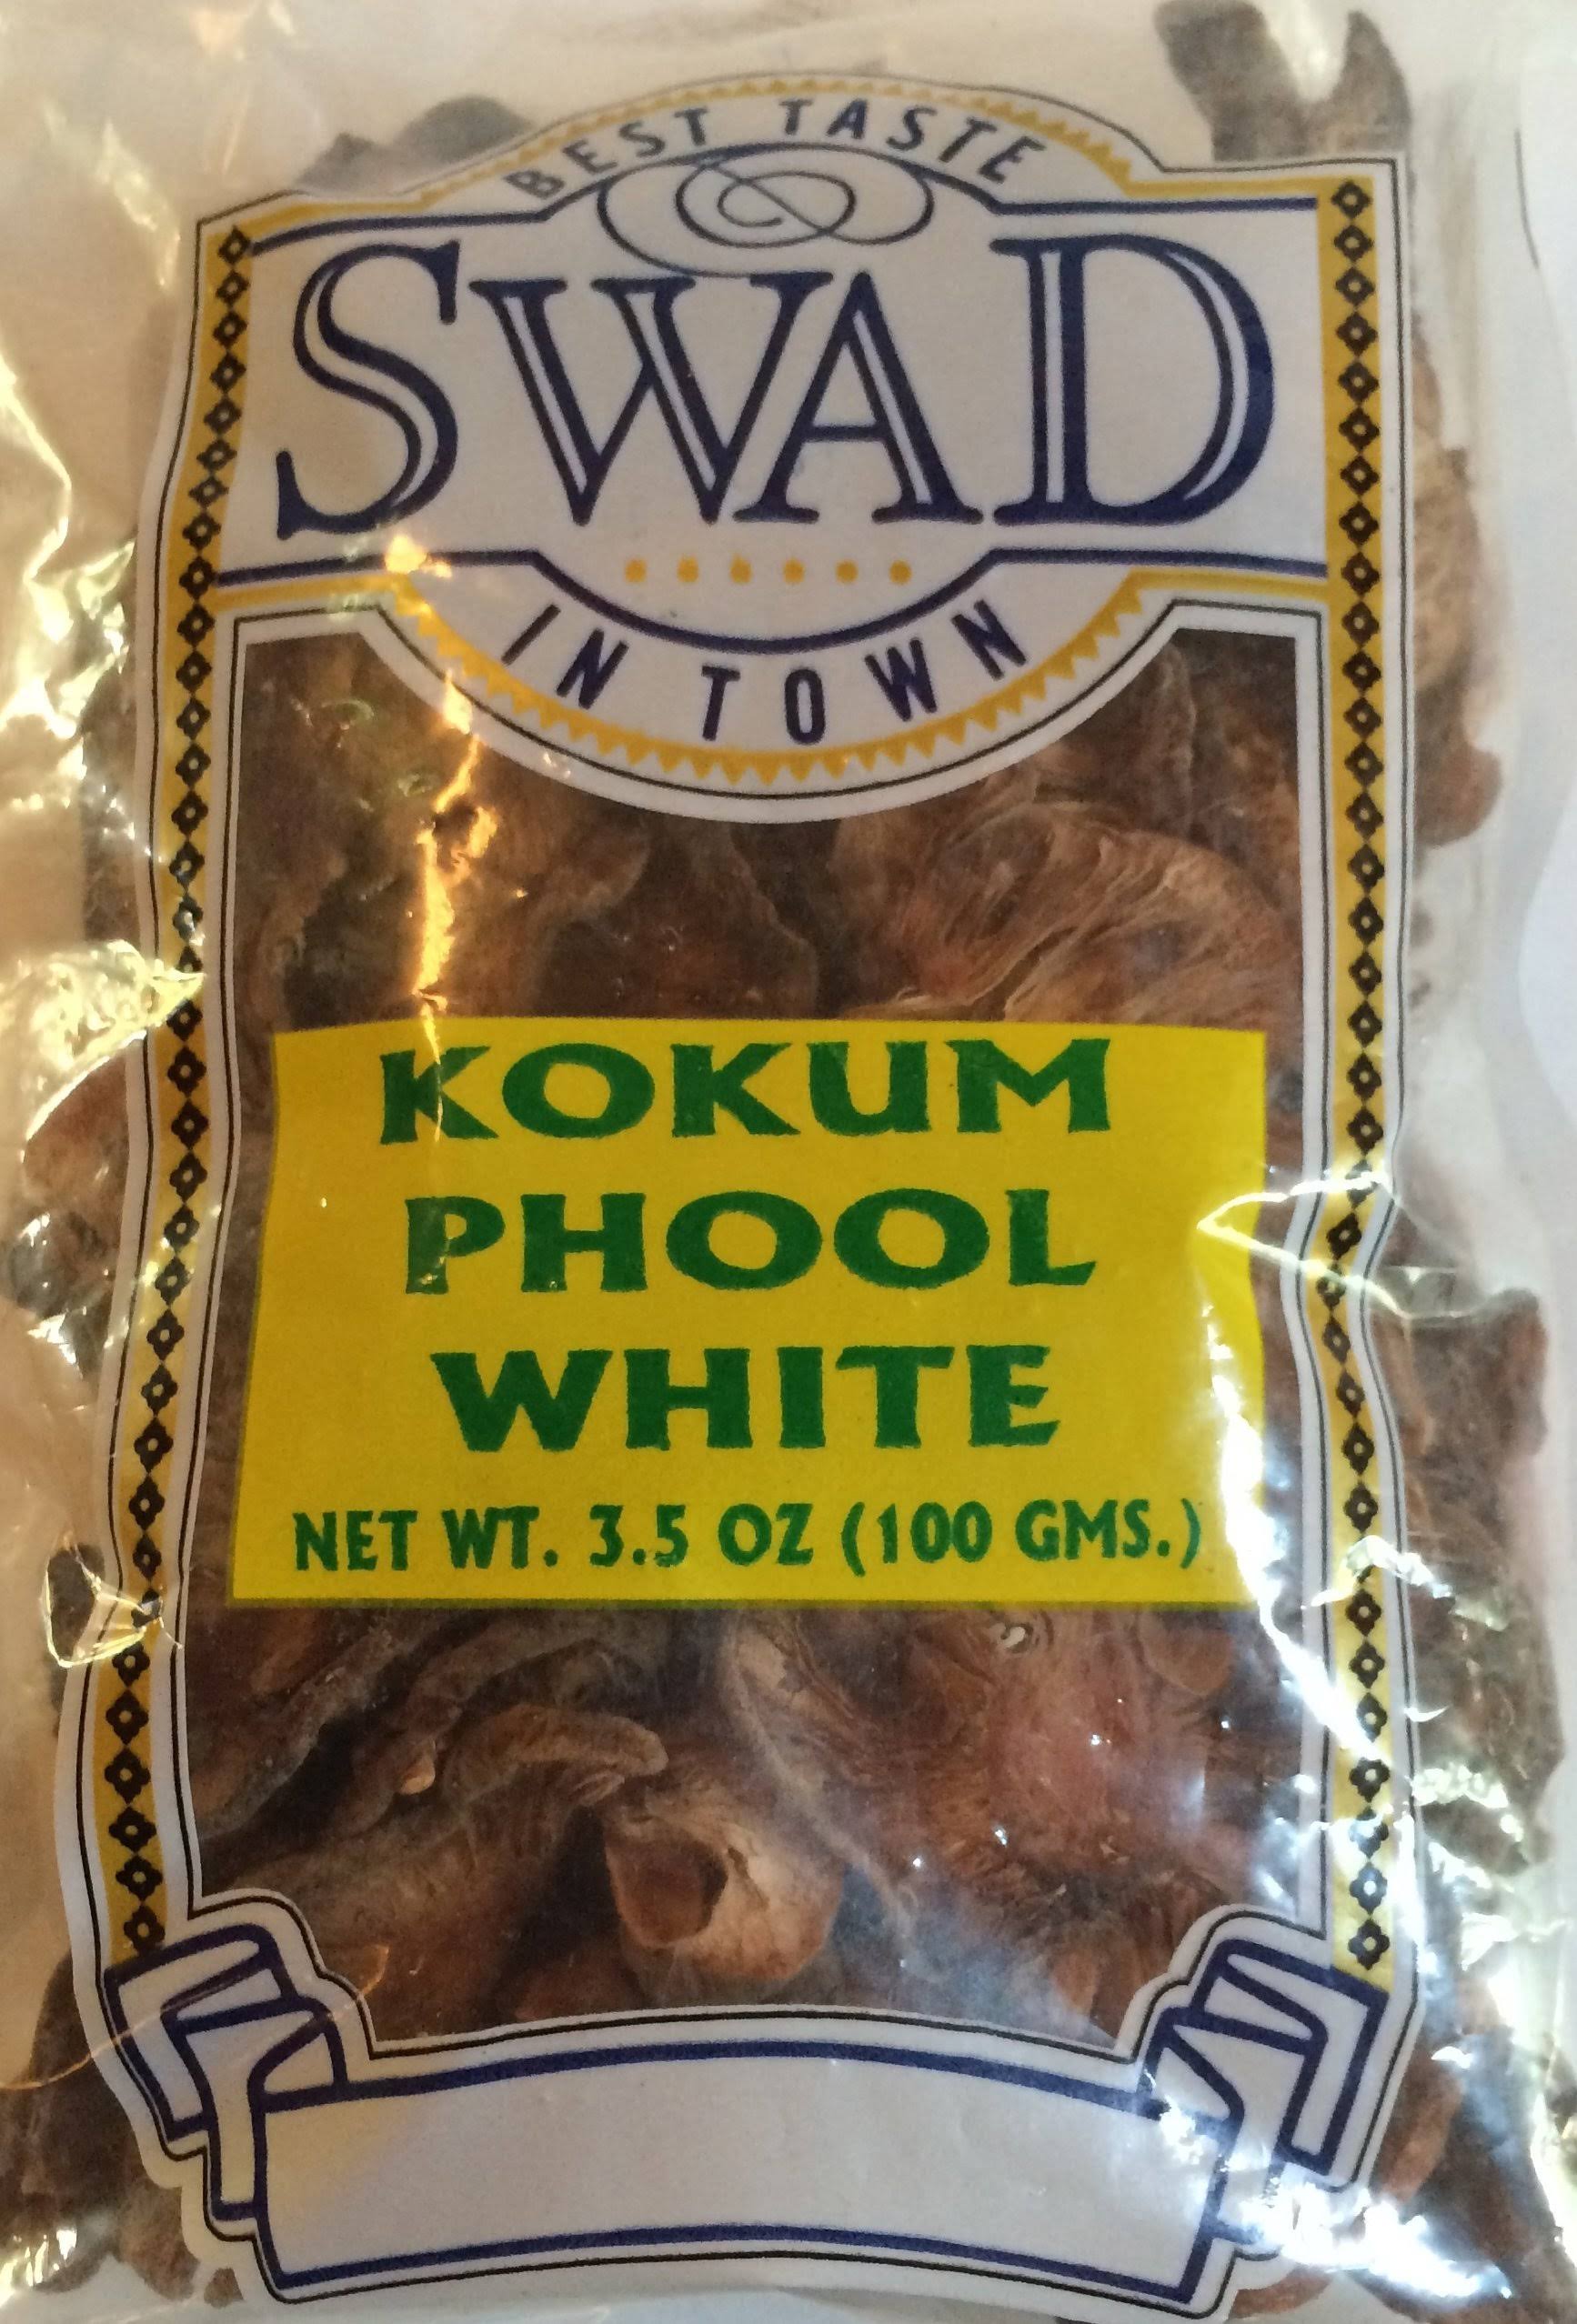 Swad Kokum Phool White 3.5 oz